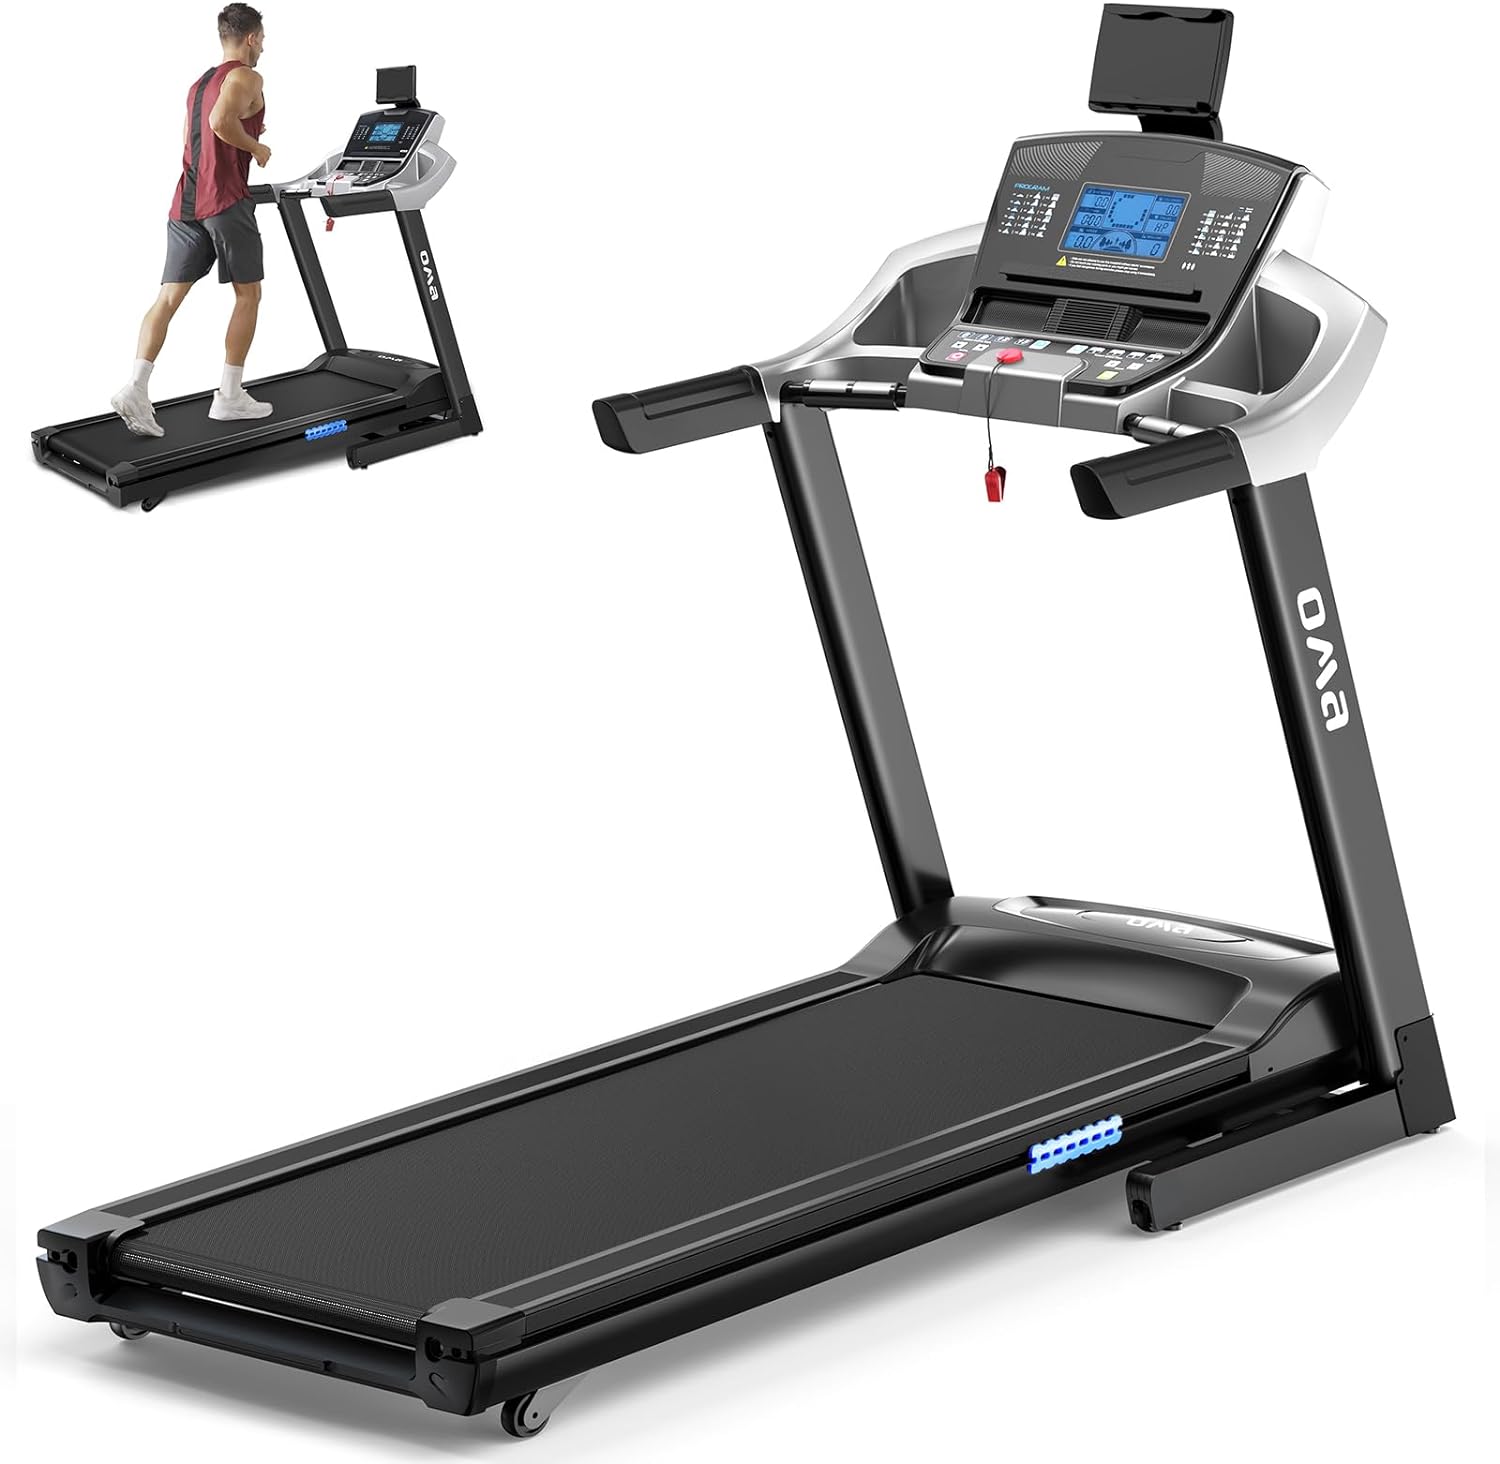 OMA 5925 Treadmill for Home